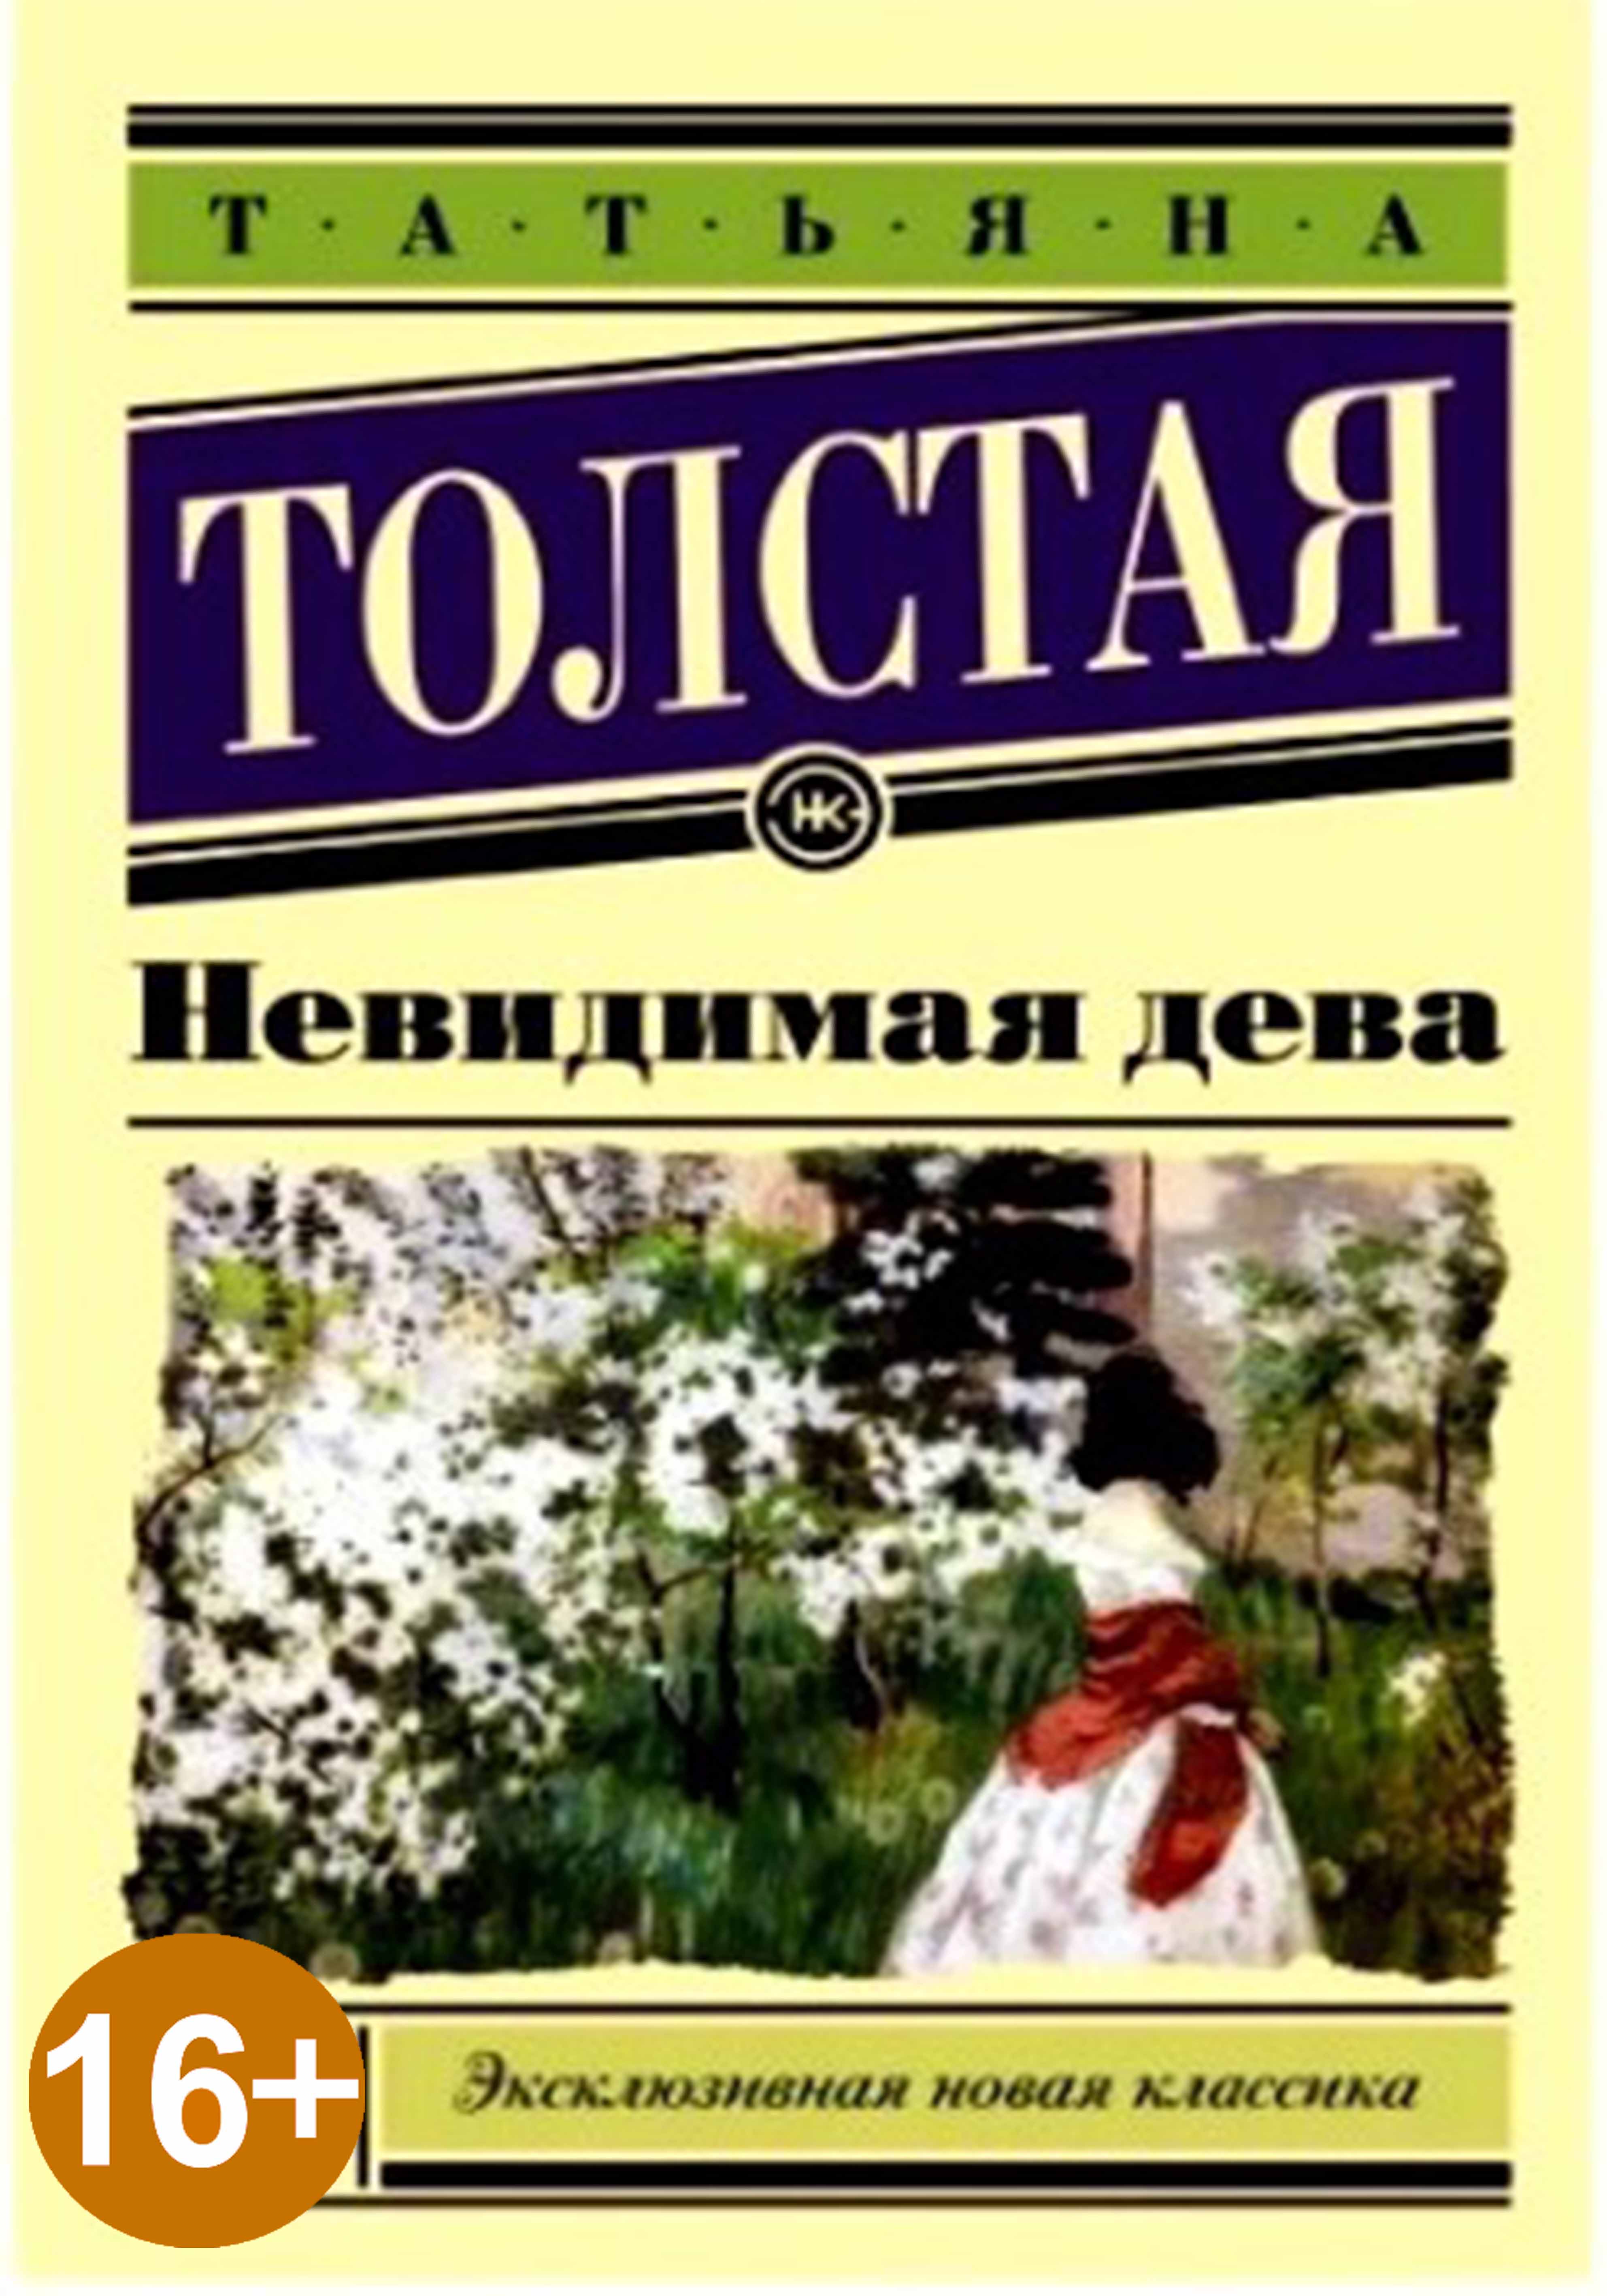 MAIN Tolstaya